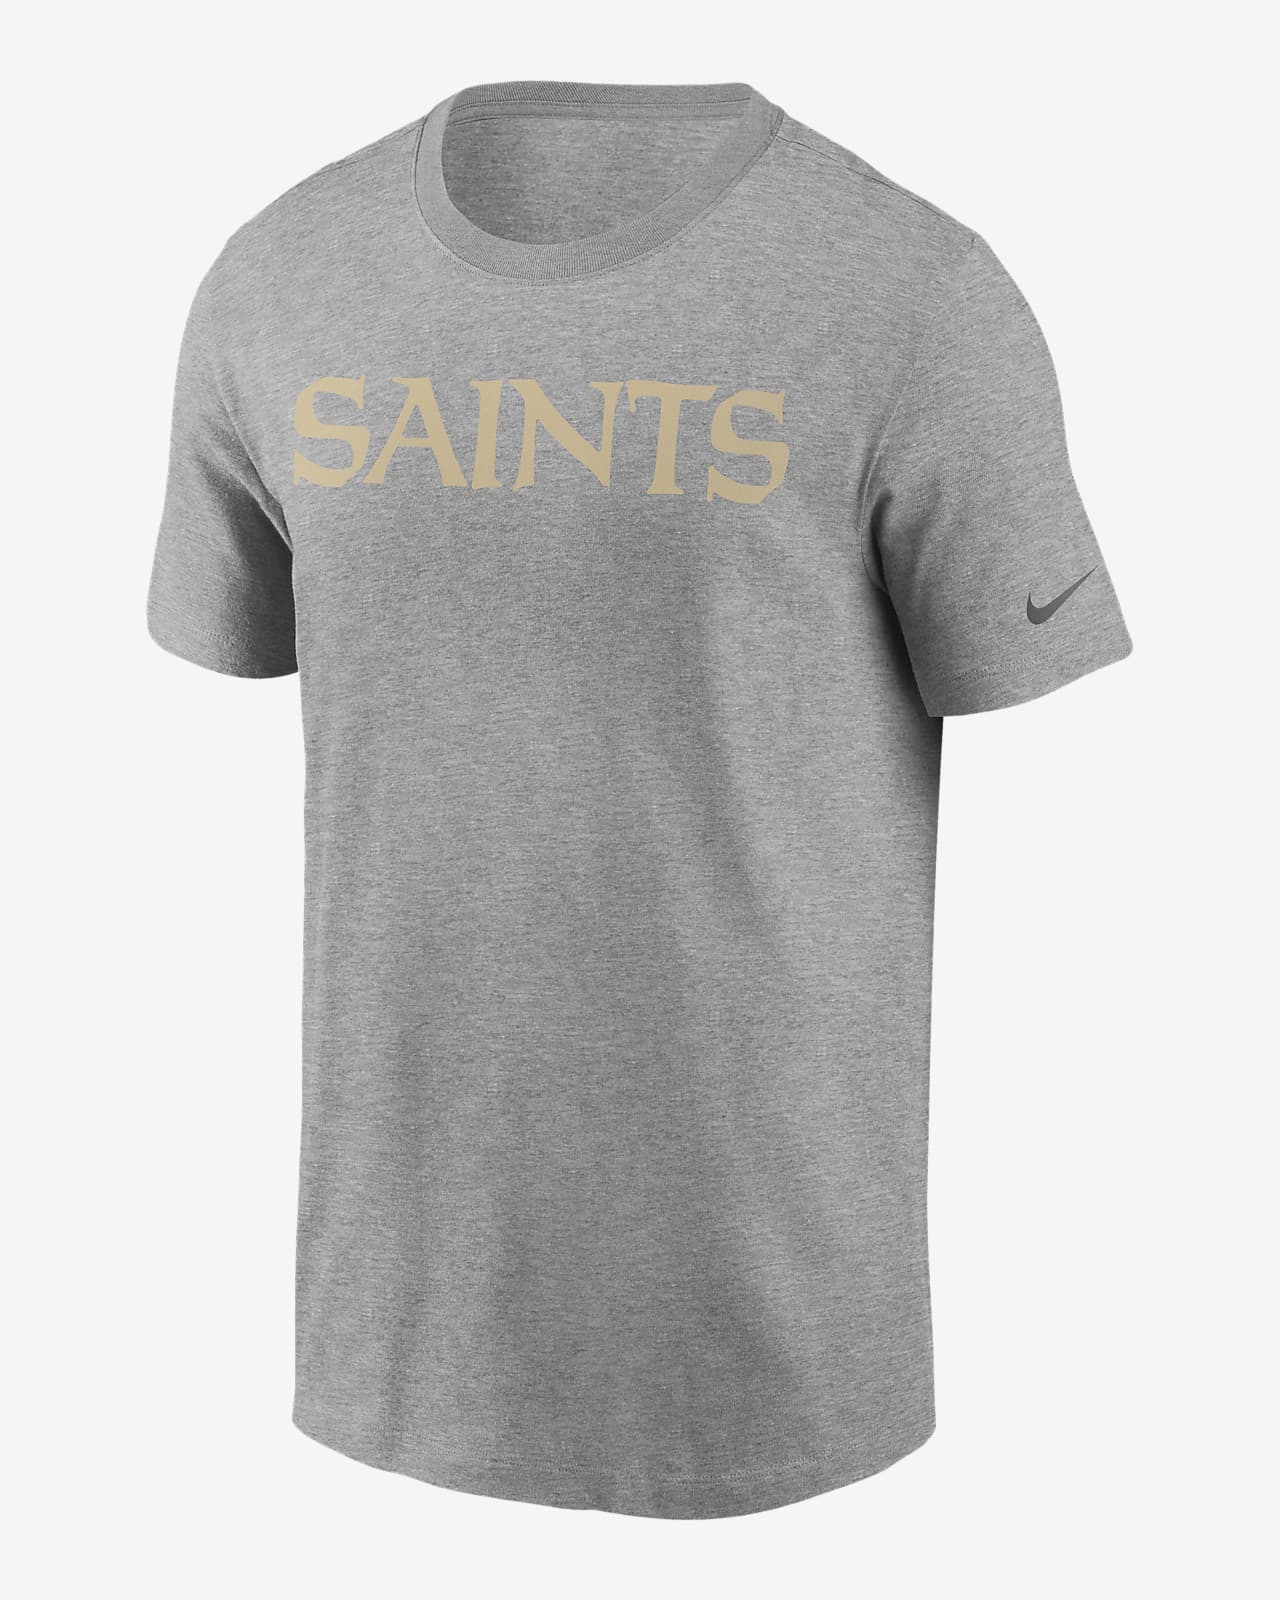 nfl saints shirts